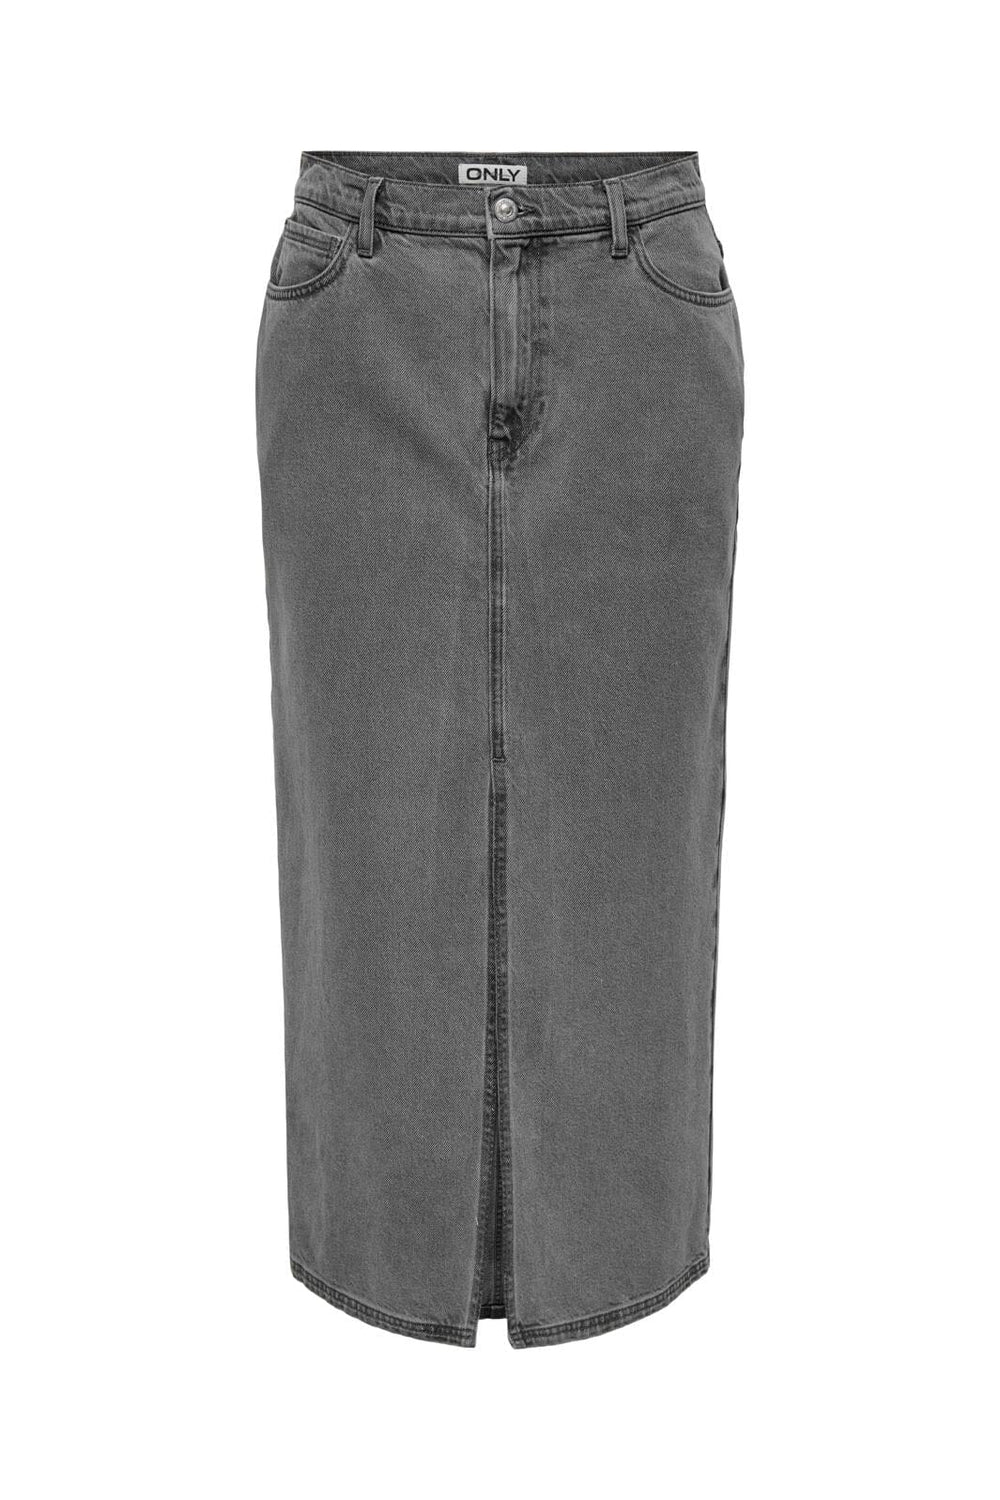 Only - Onlsophie Long Skirt - 4655081 Medium Grey Denim